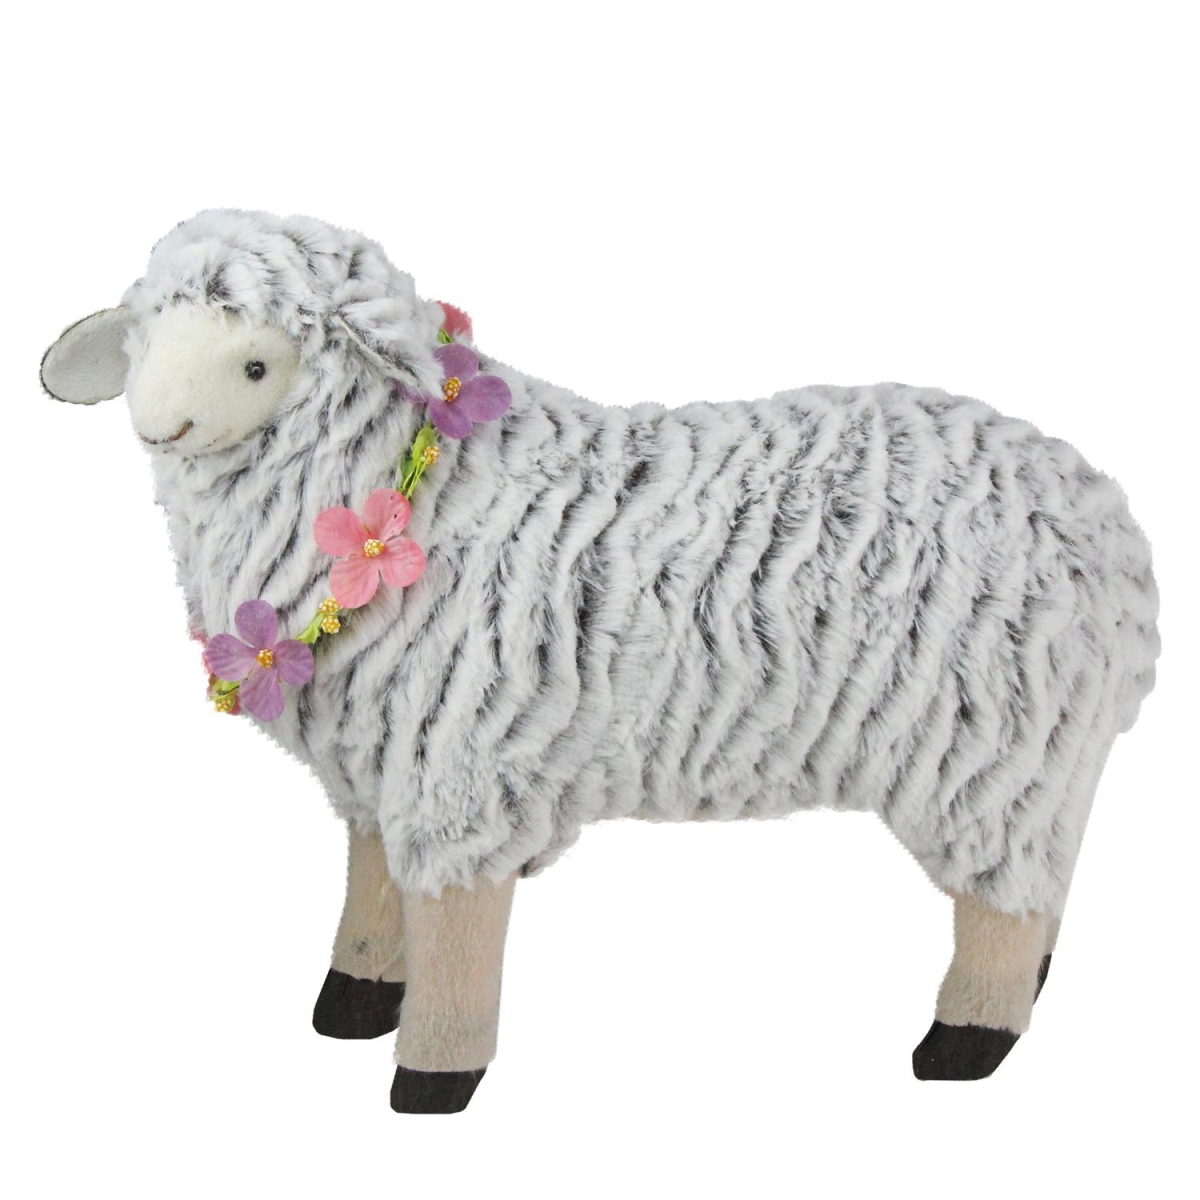 32728978 13 In. White & Black Plush Standing Sheep Spring Easter Figure